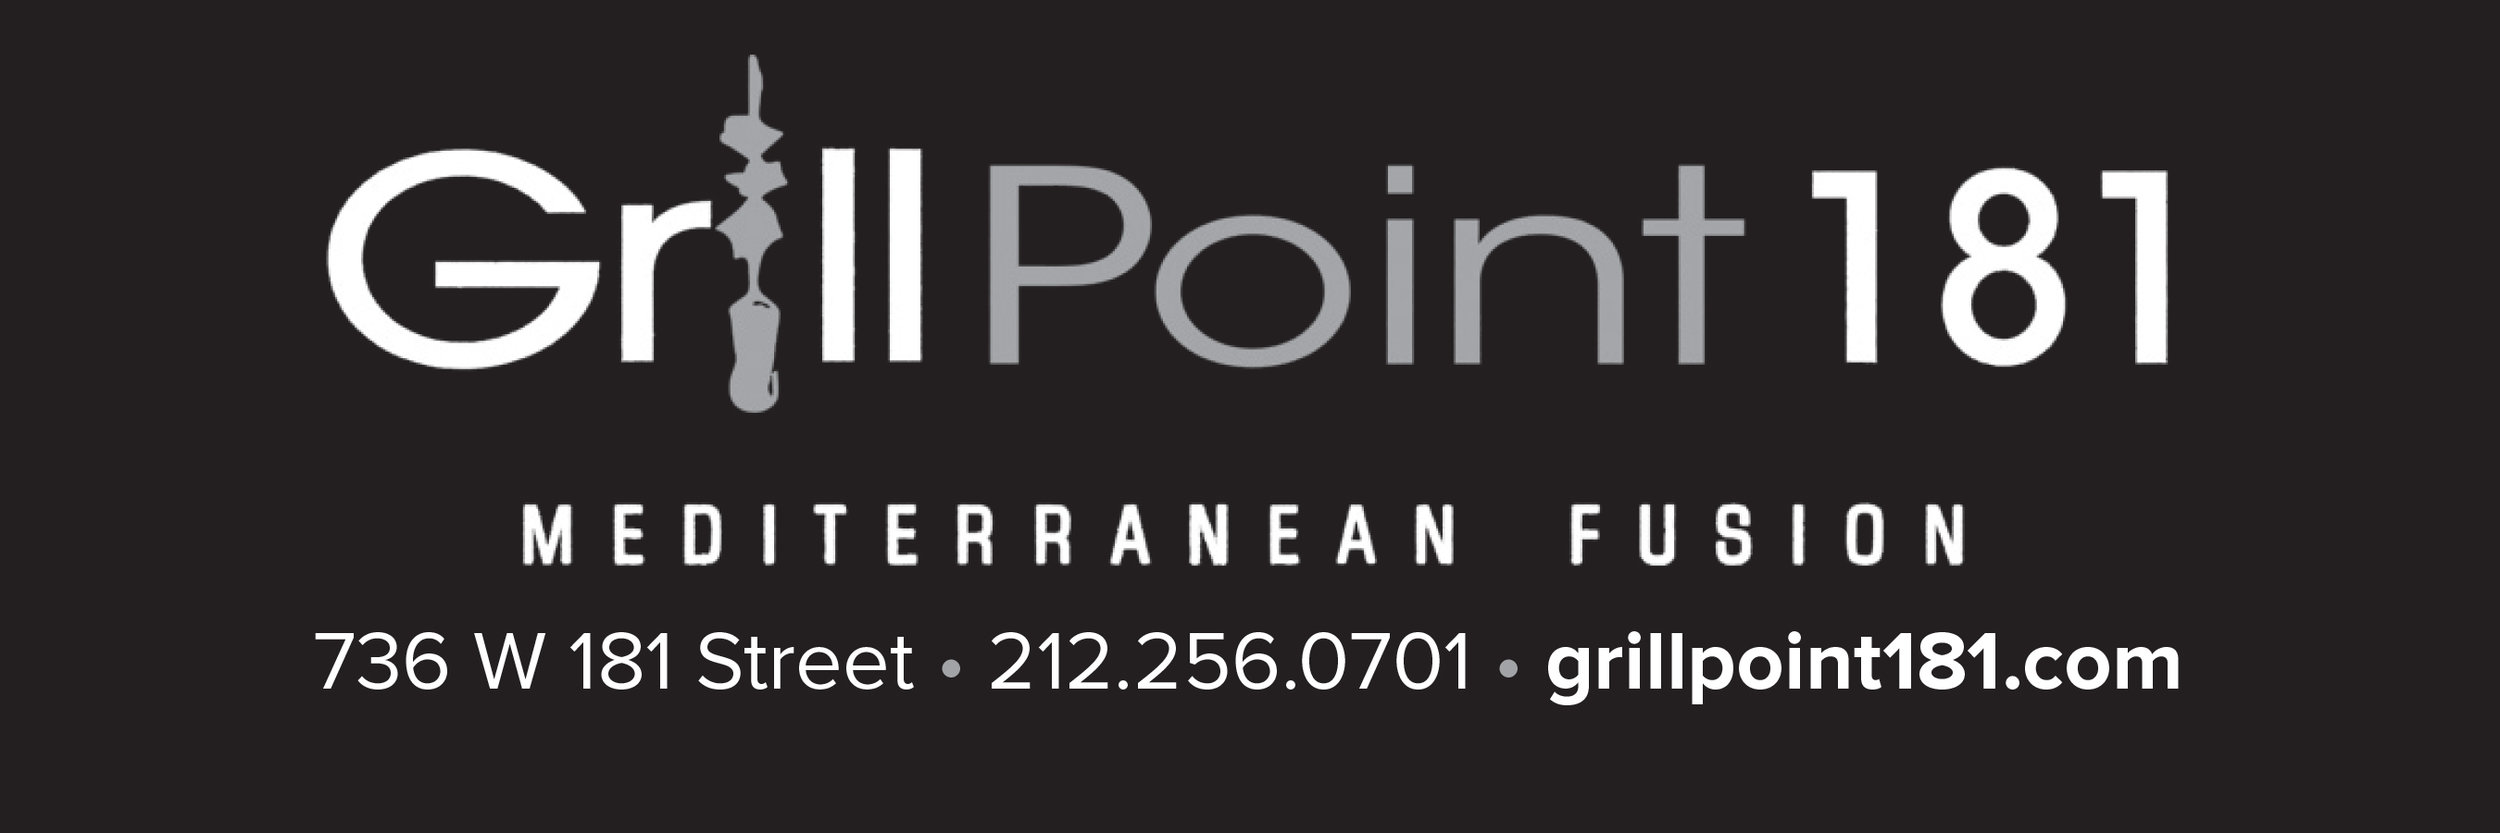 4th_grillpoint-1.jpg